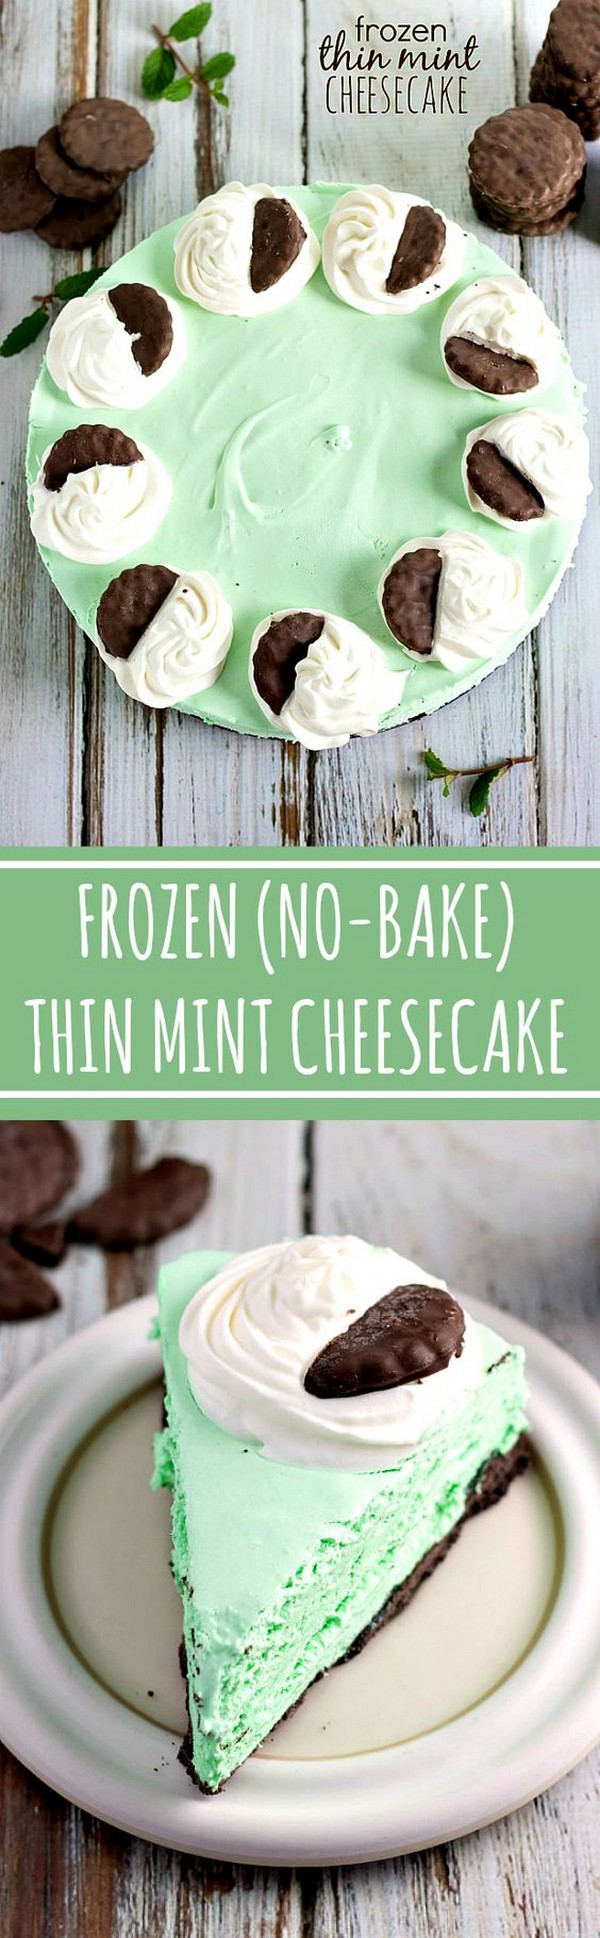 Thin Mint Cheesecake